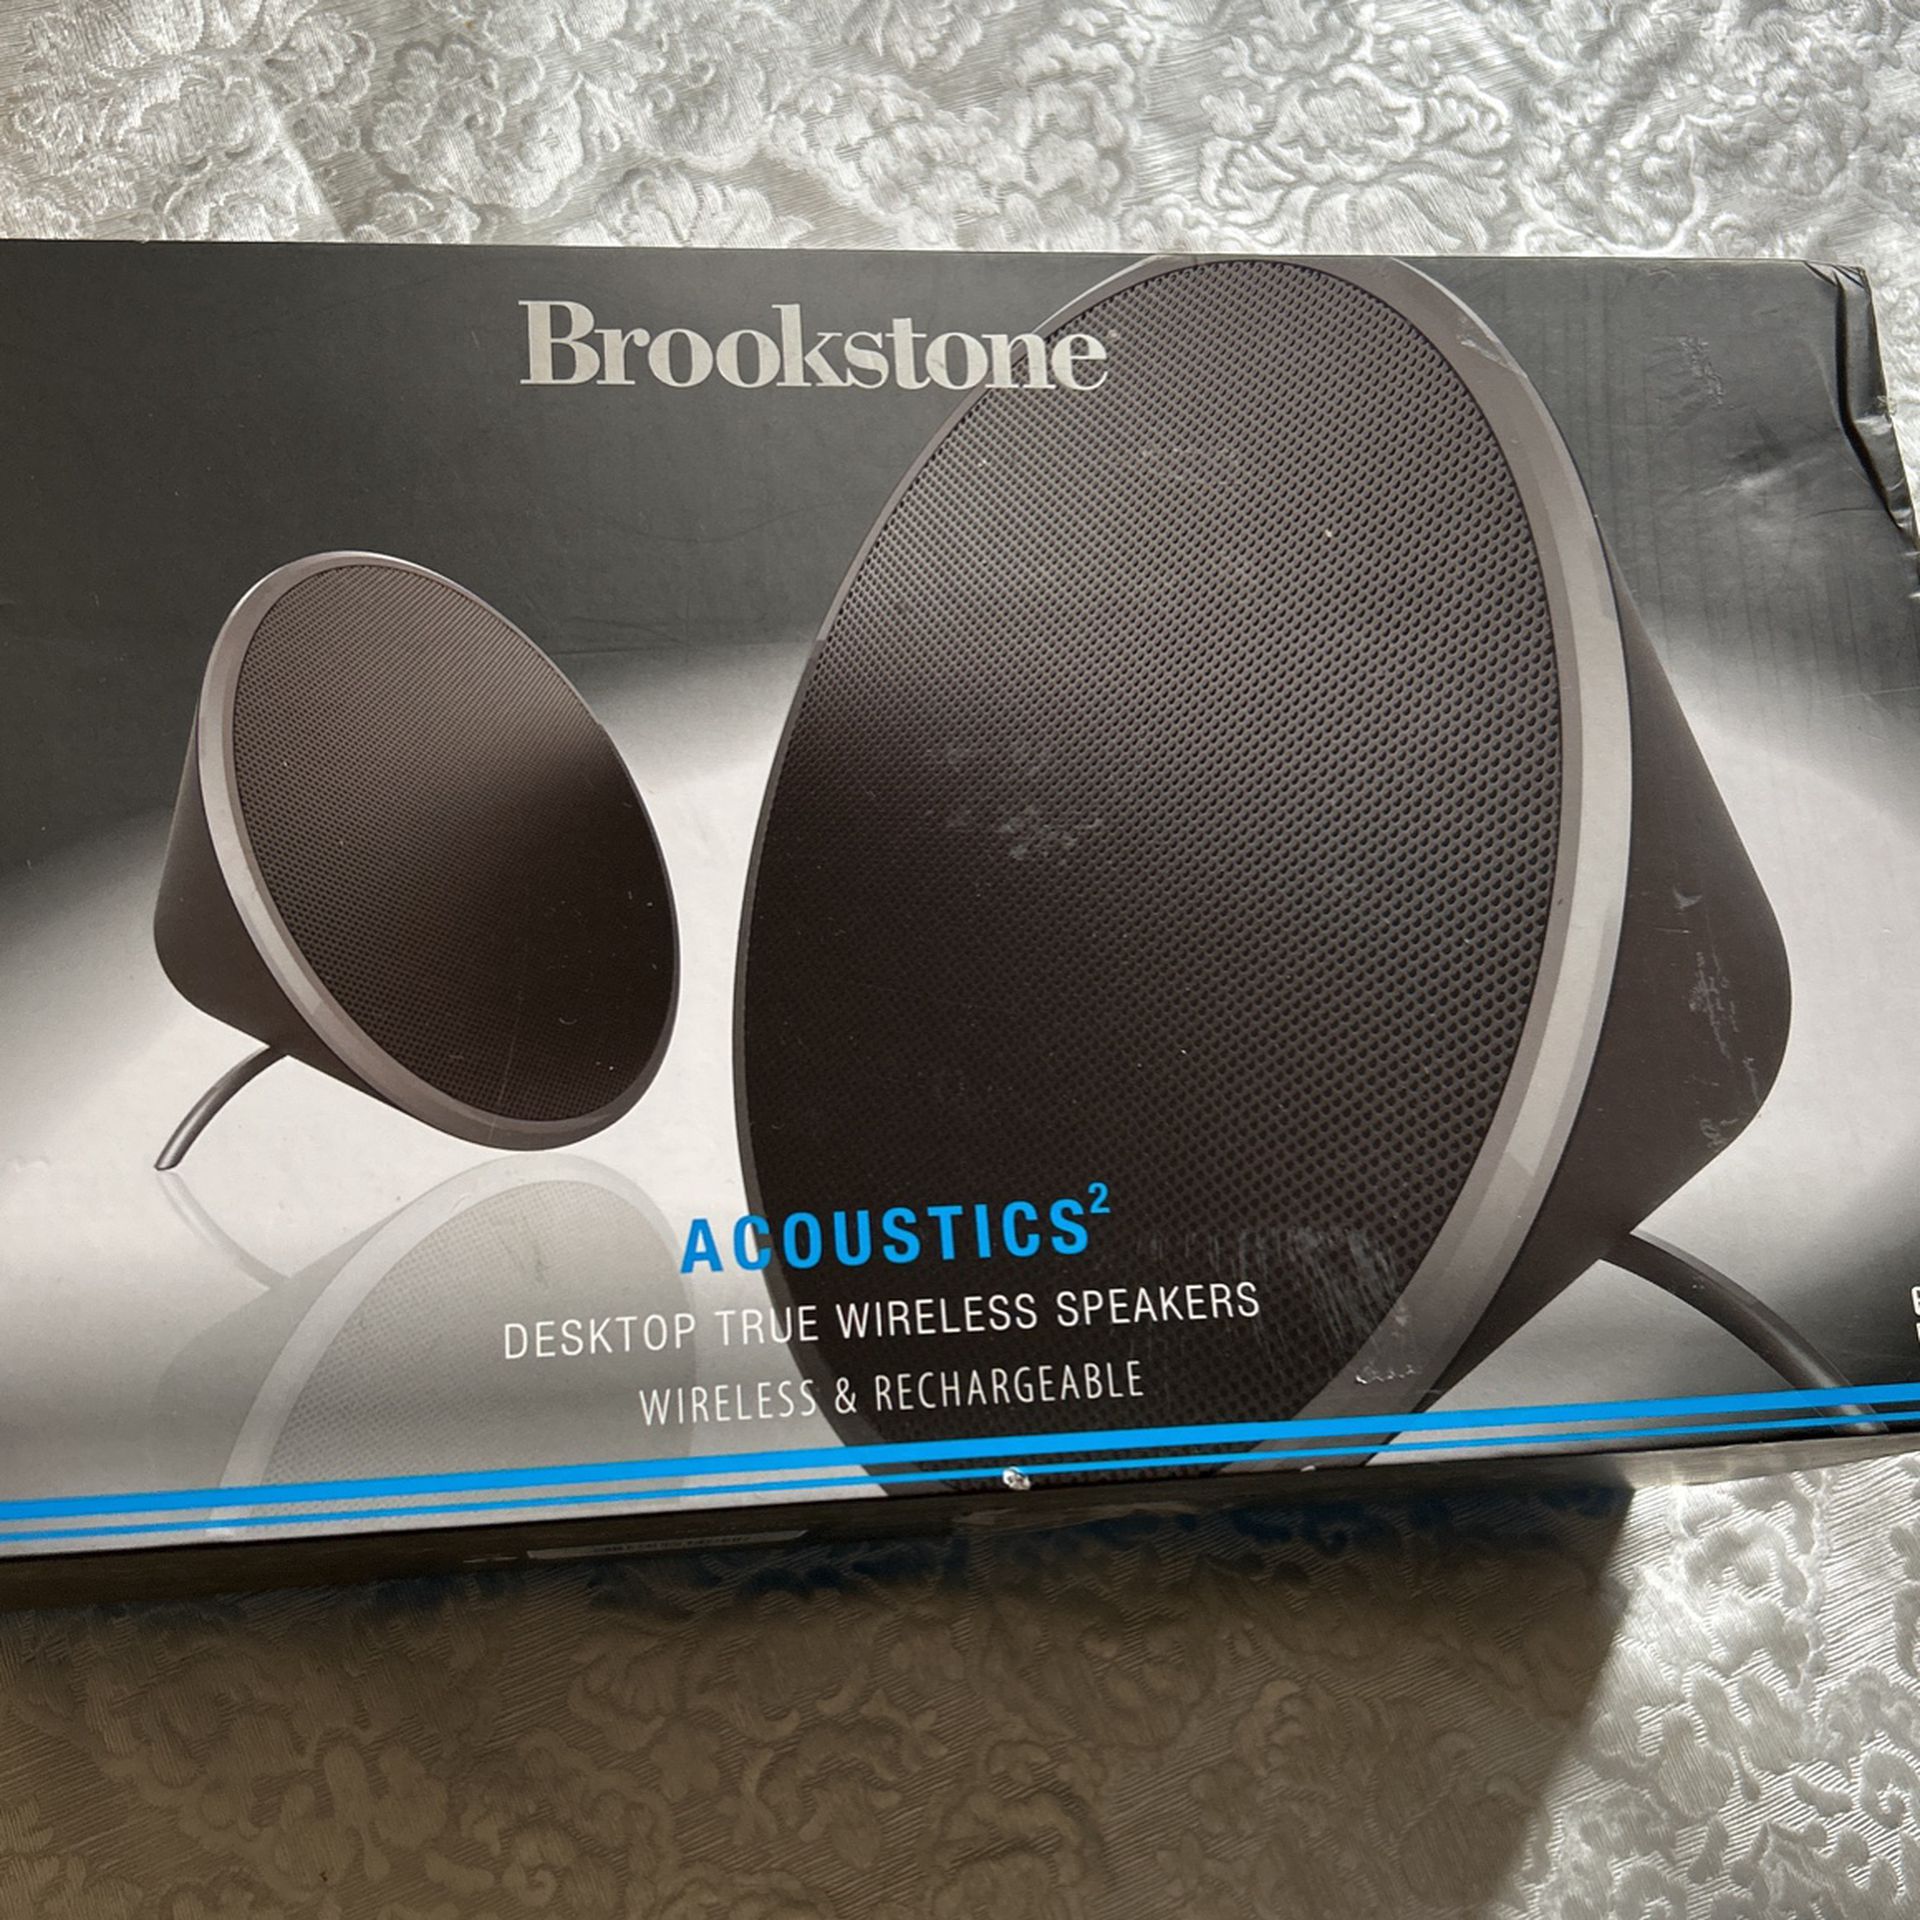 Brookstone Acoustics 